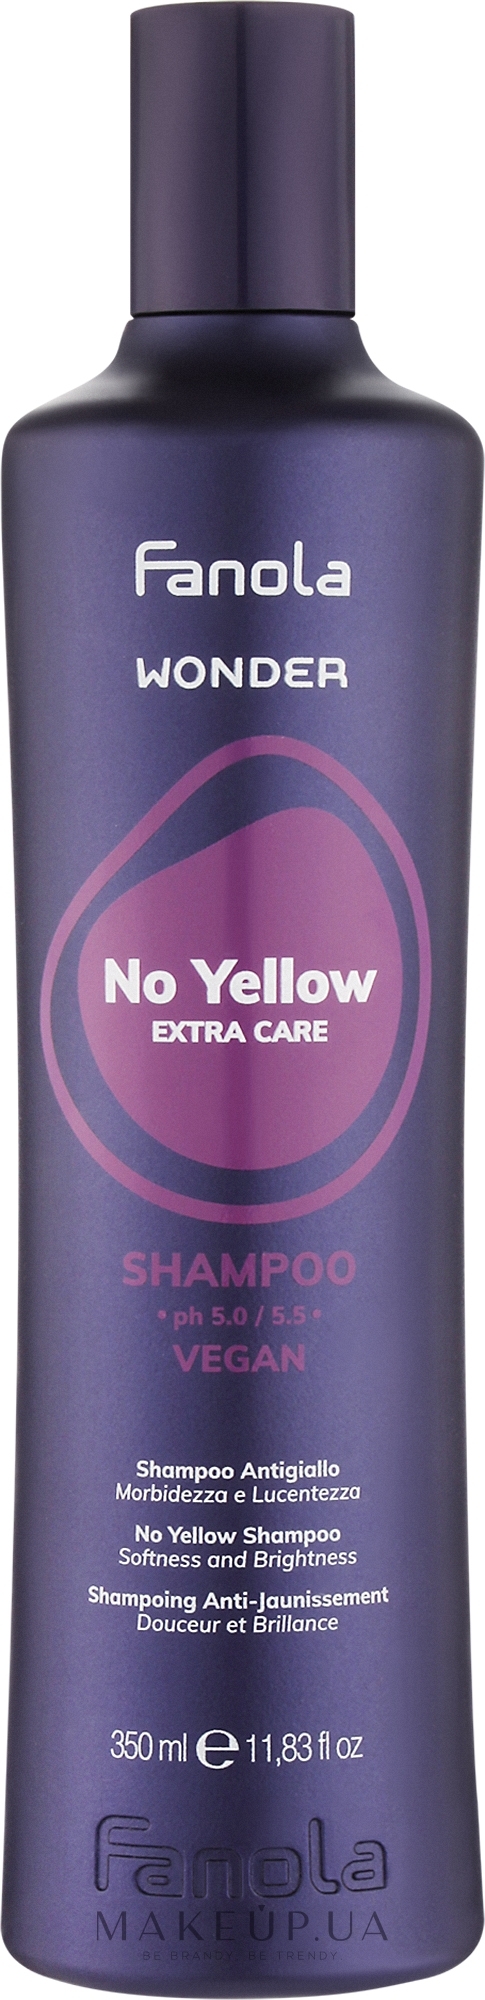 Шампунь антижовтий для волосся - Fanola Wonder No Yellow Extra Care Shampoo — фото 350ml